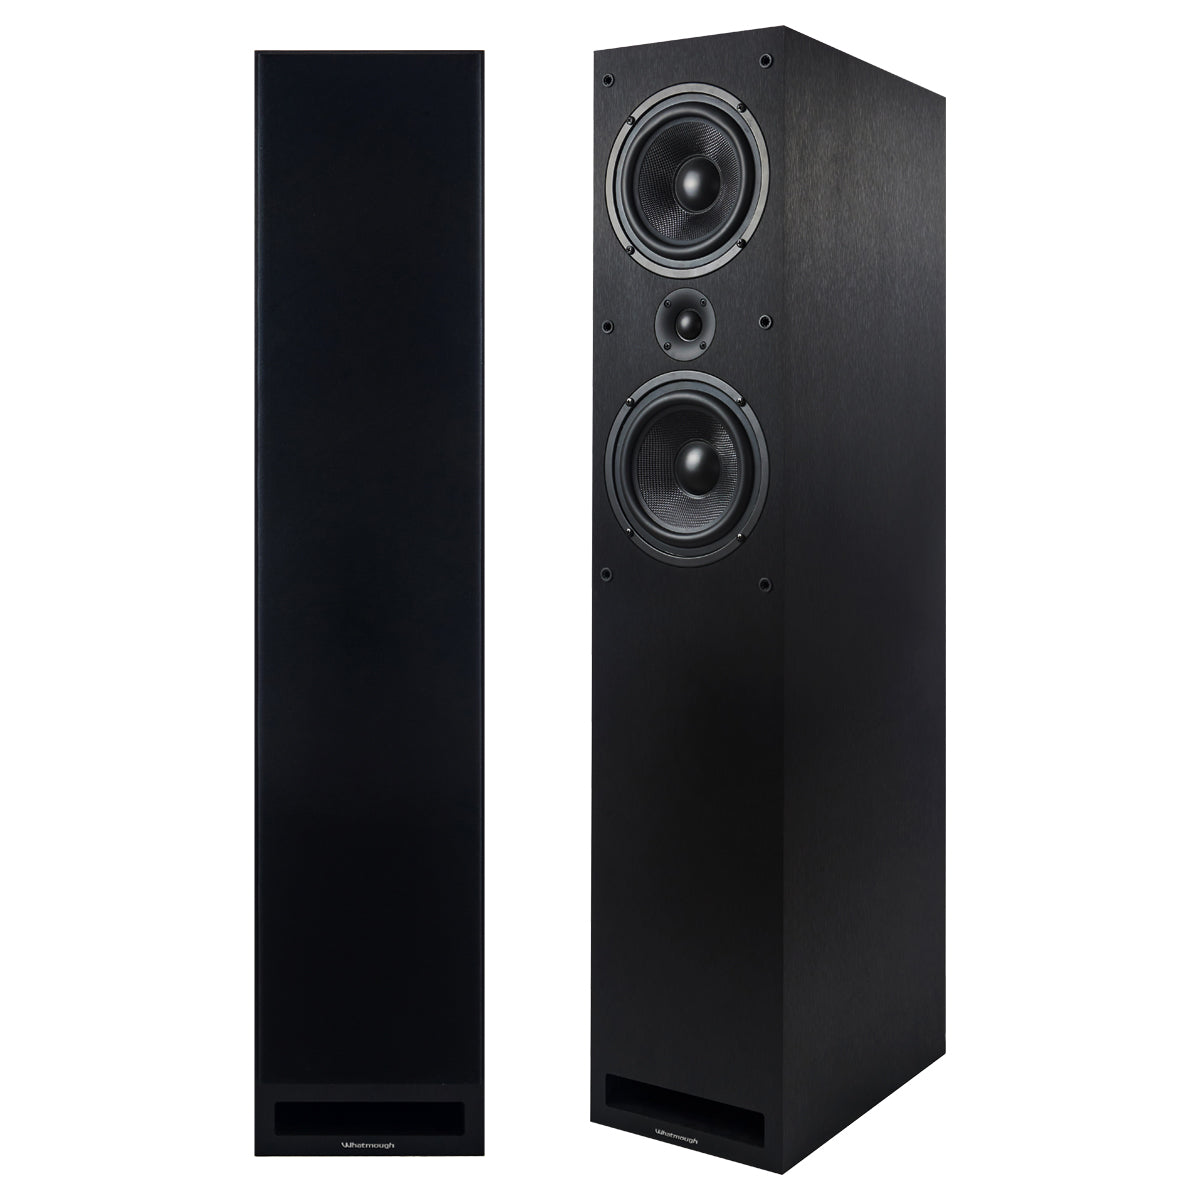 Whatmough Emotion WEFS265 2 Way Floorstanding Speaker - Black - The Audio Experts